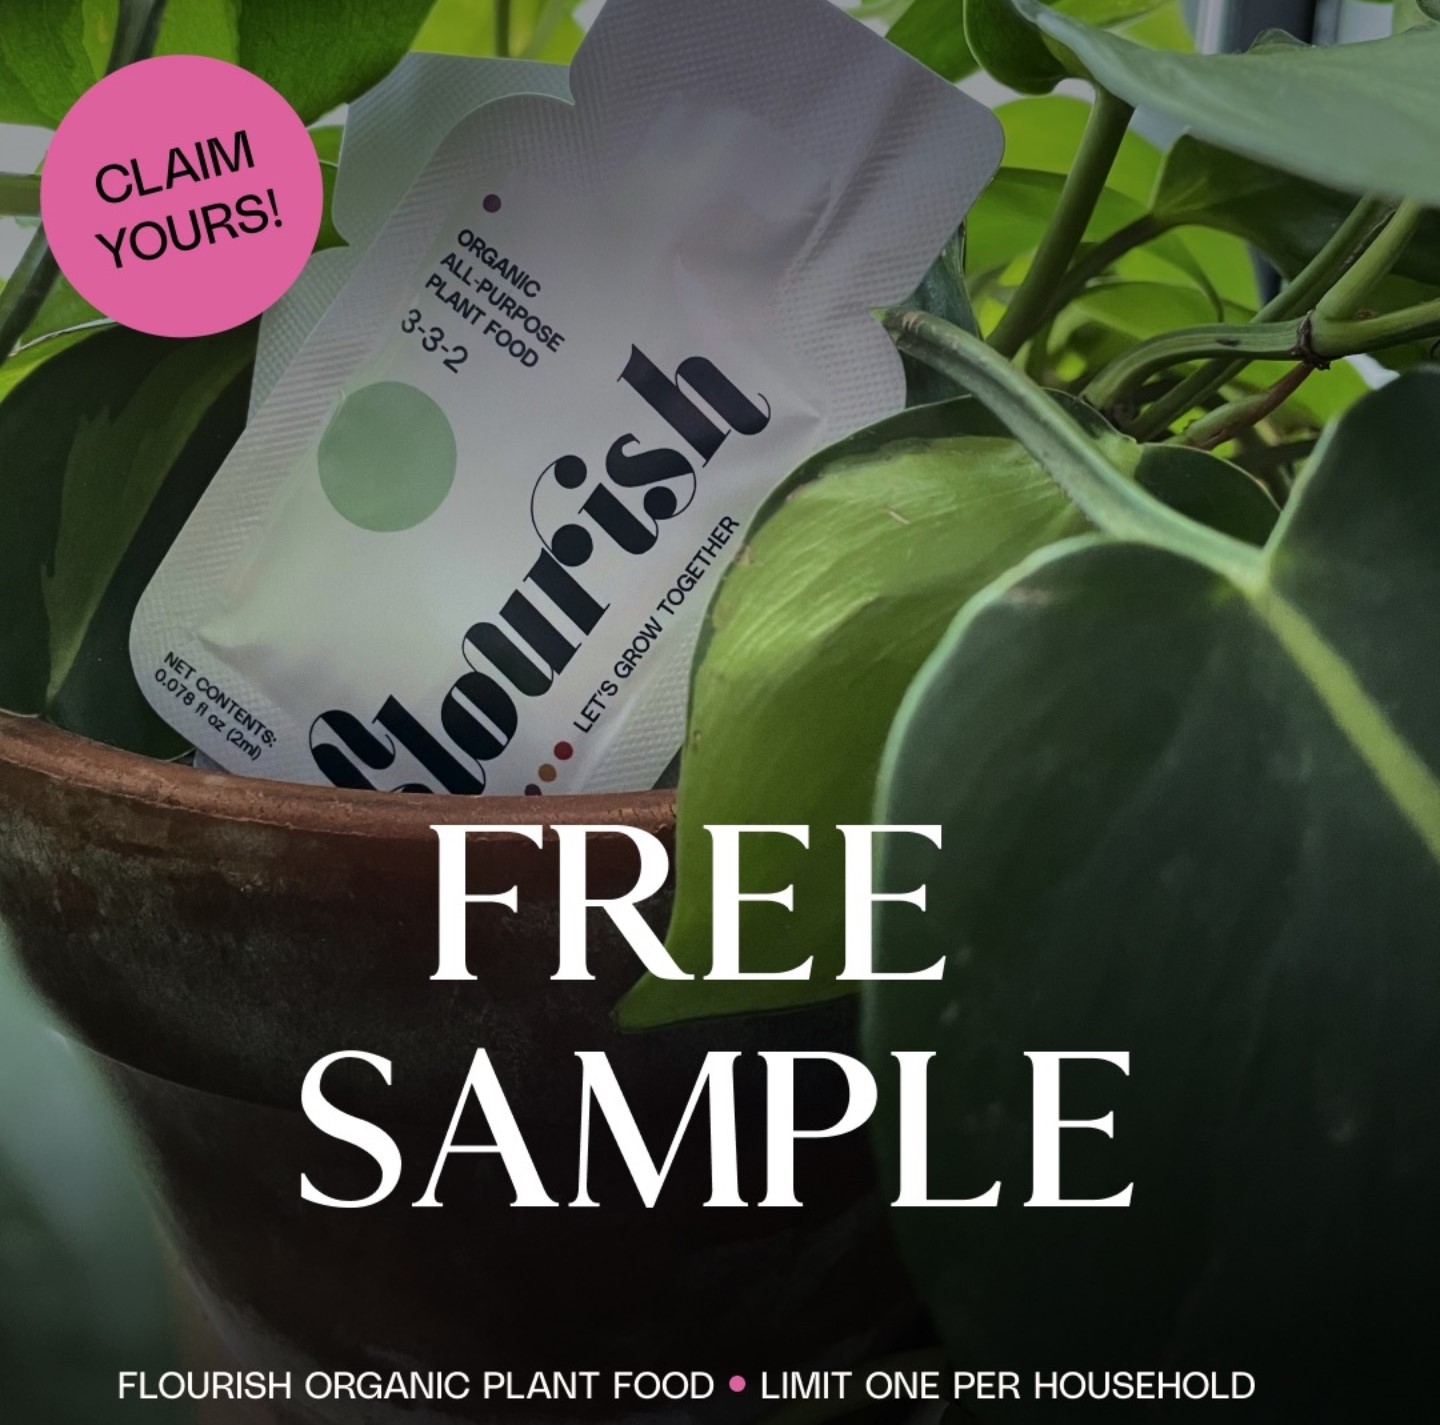 Free Sample of Flourish Organic Plant Food